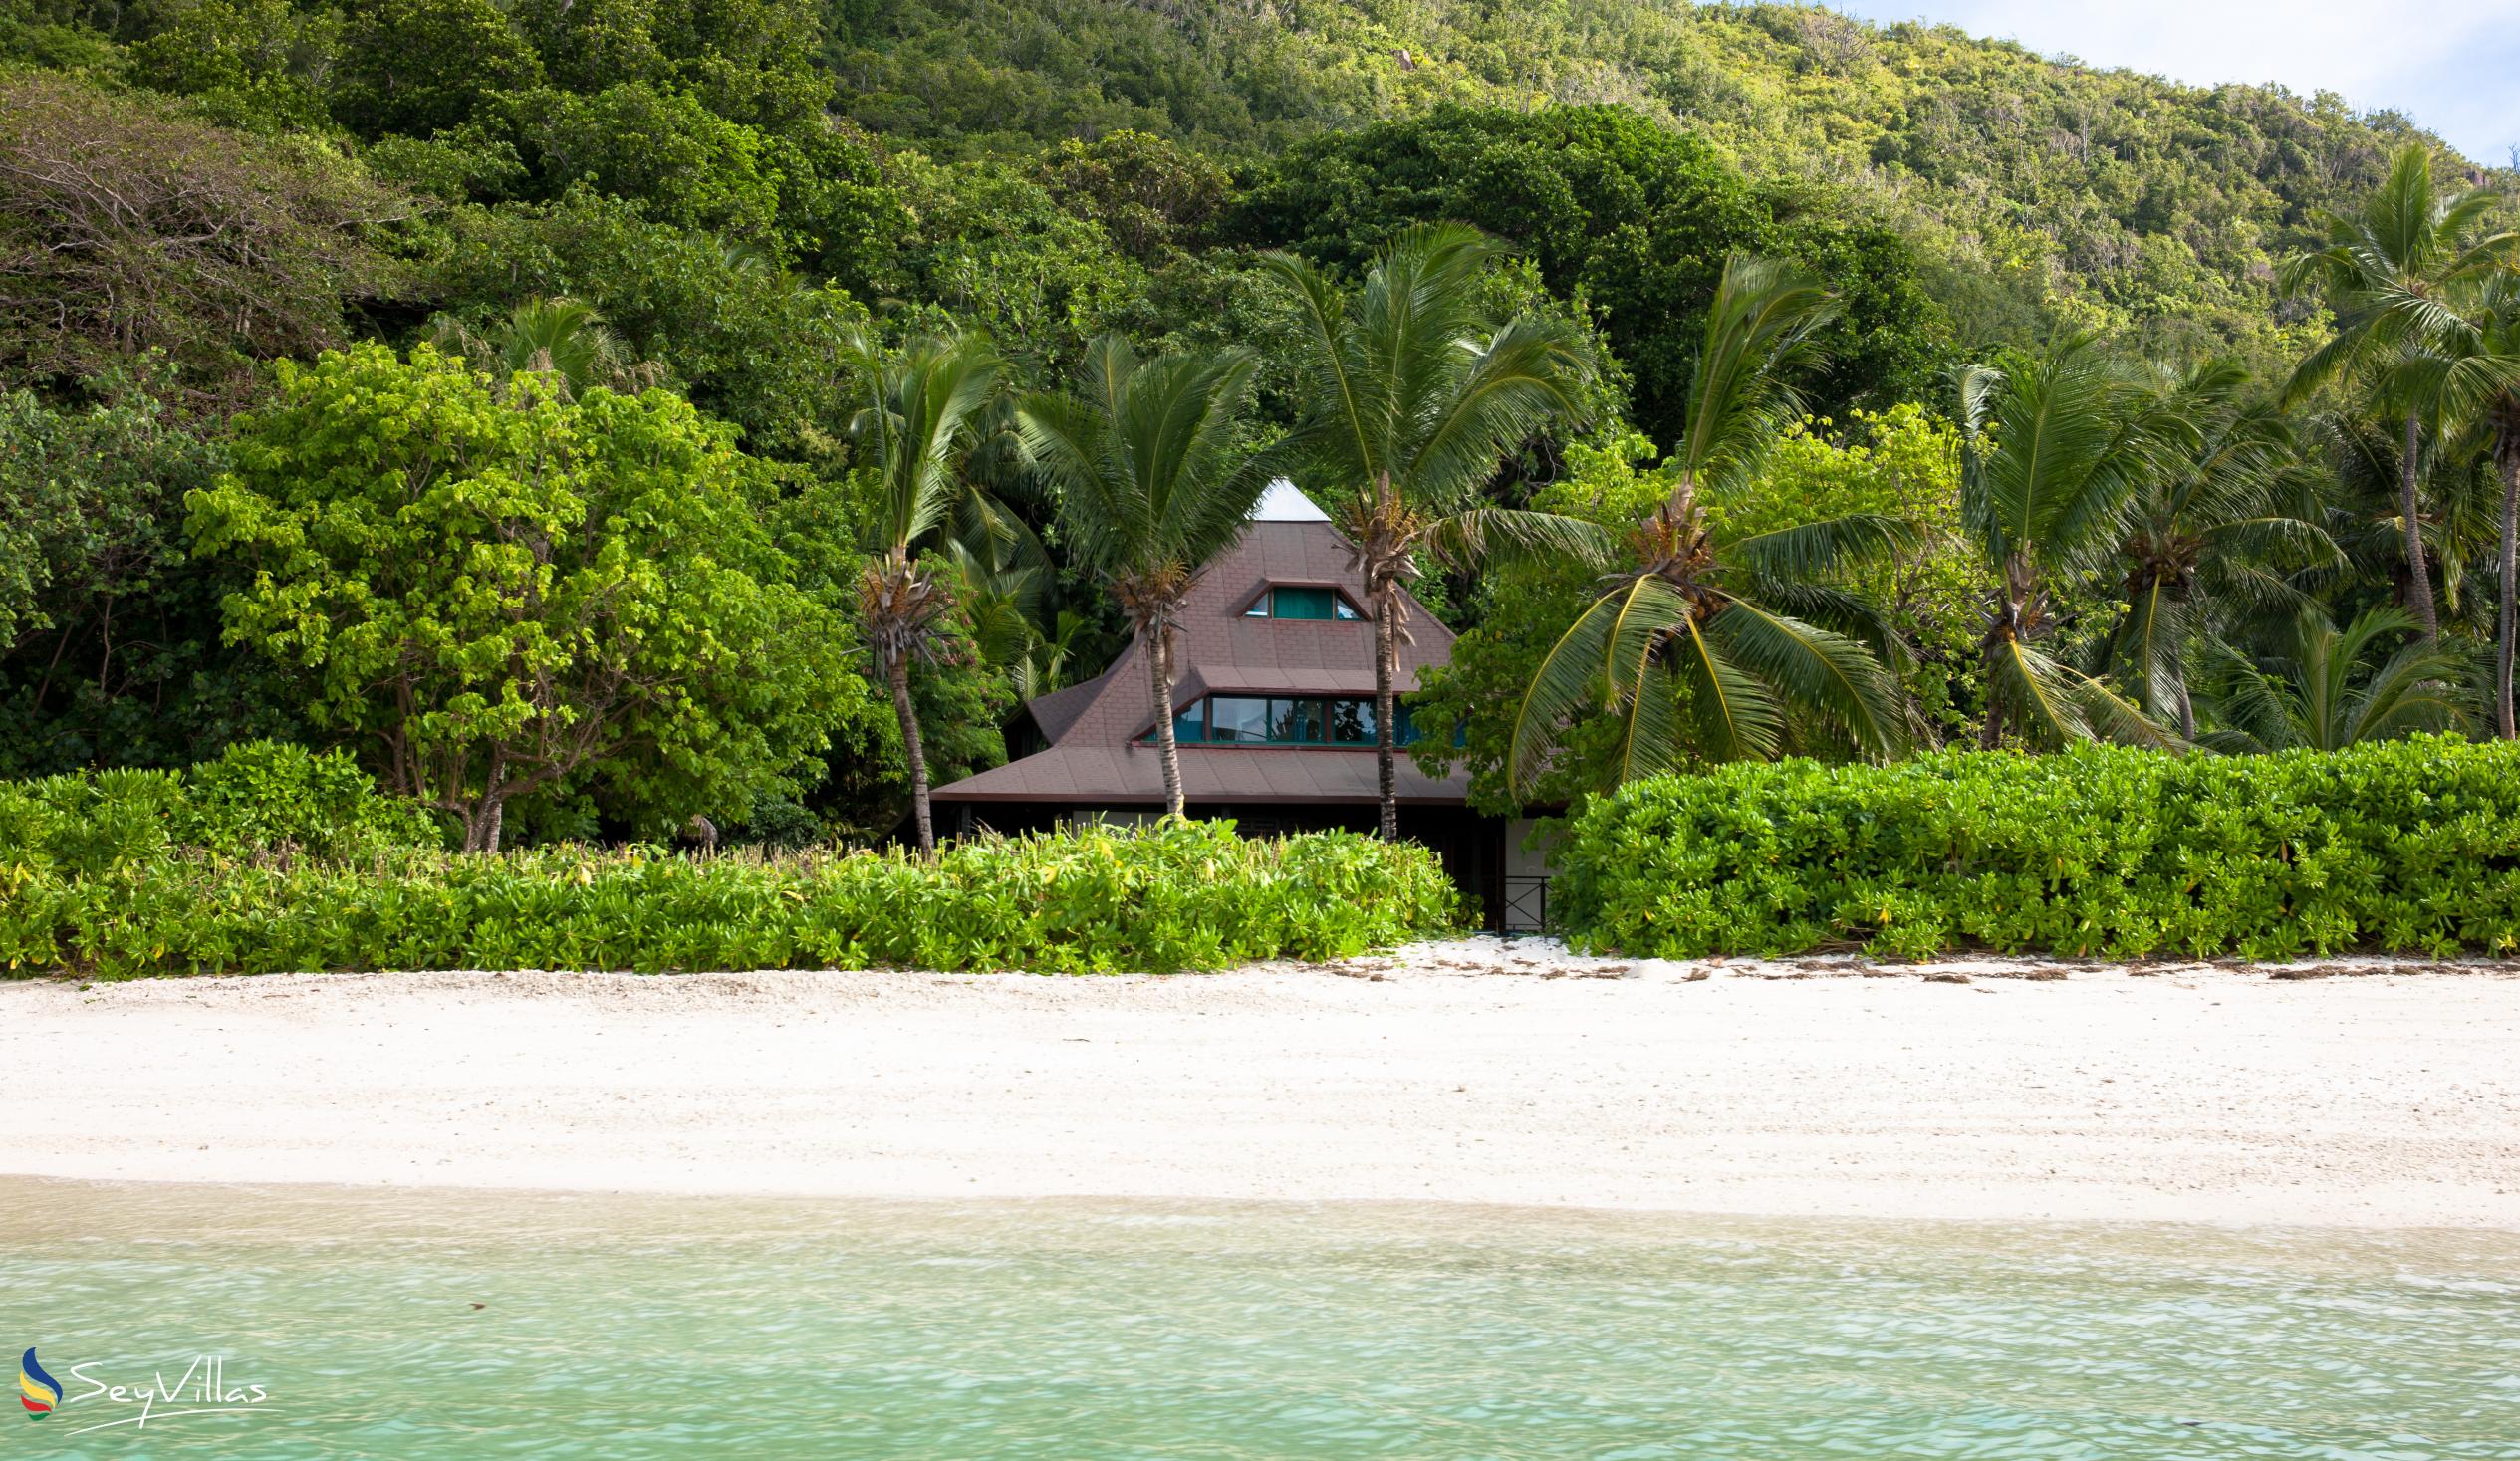 Foto 7: Anse la Farine - Praslin (Seychelles)